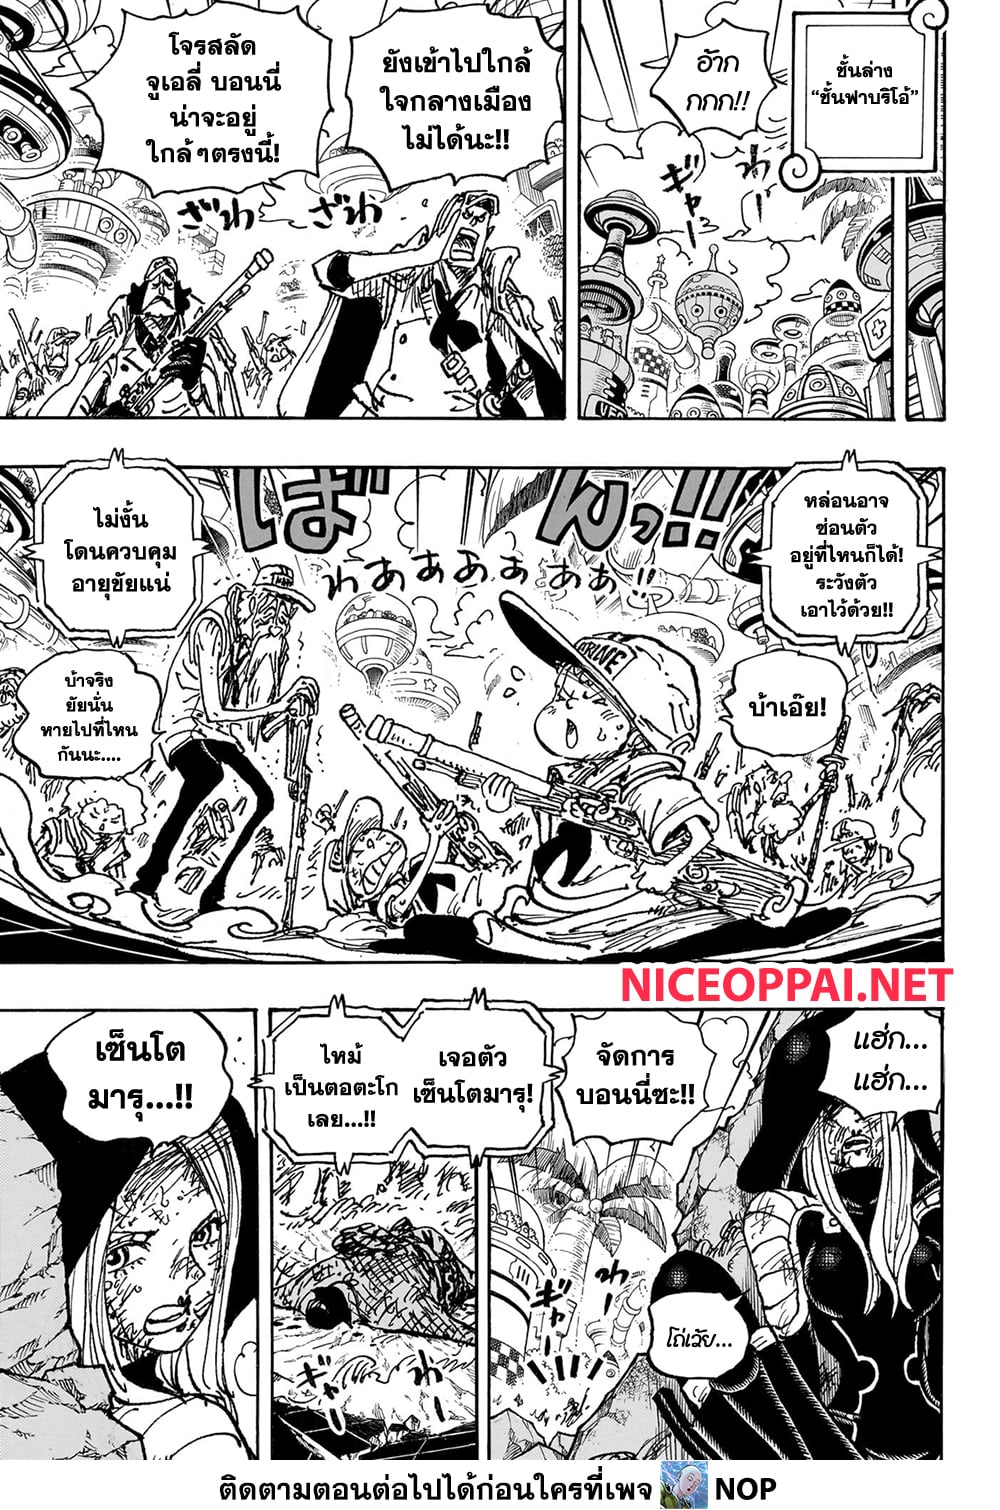 One Piece 1093-ลูฟี่ VS คิซารุ